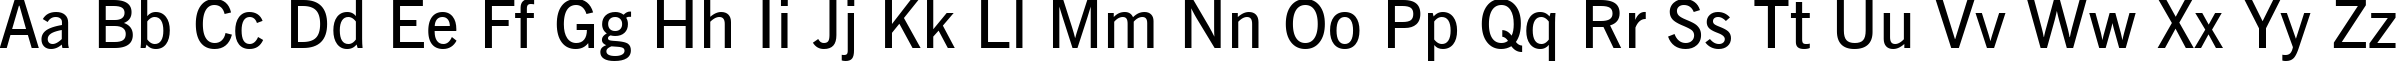 Пример написания английского алфавита шрифтом News Gothic Demi BT